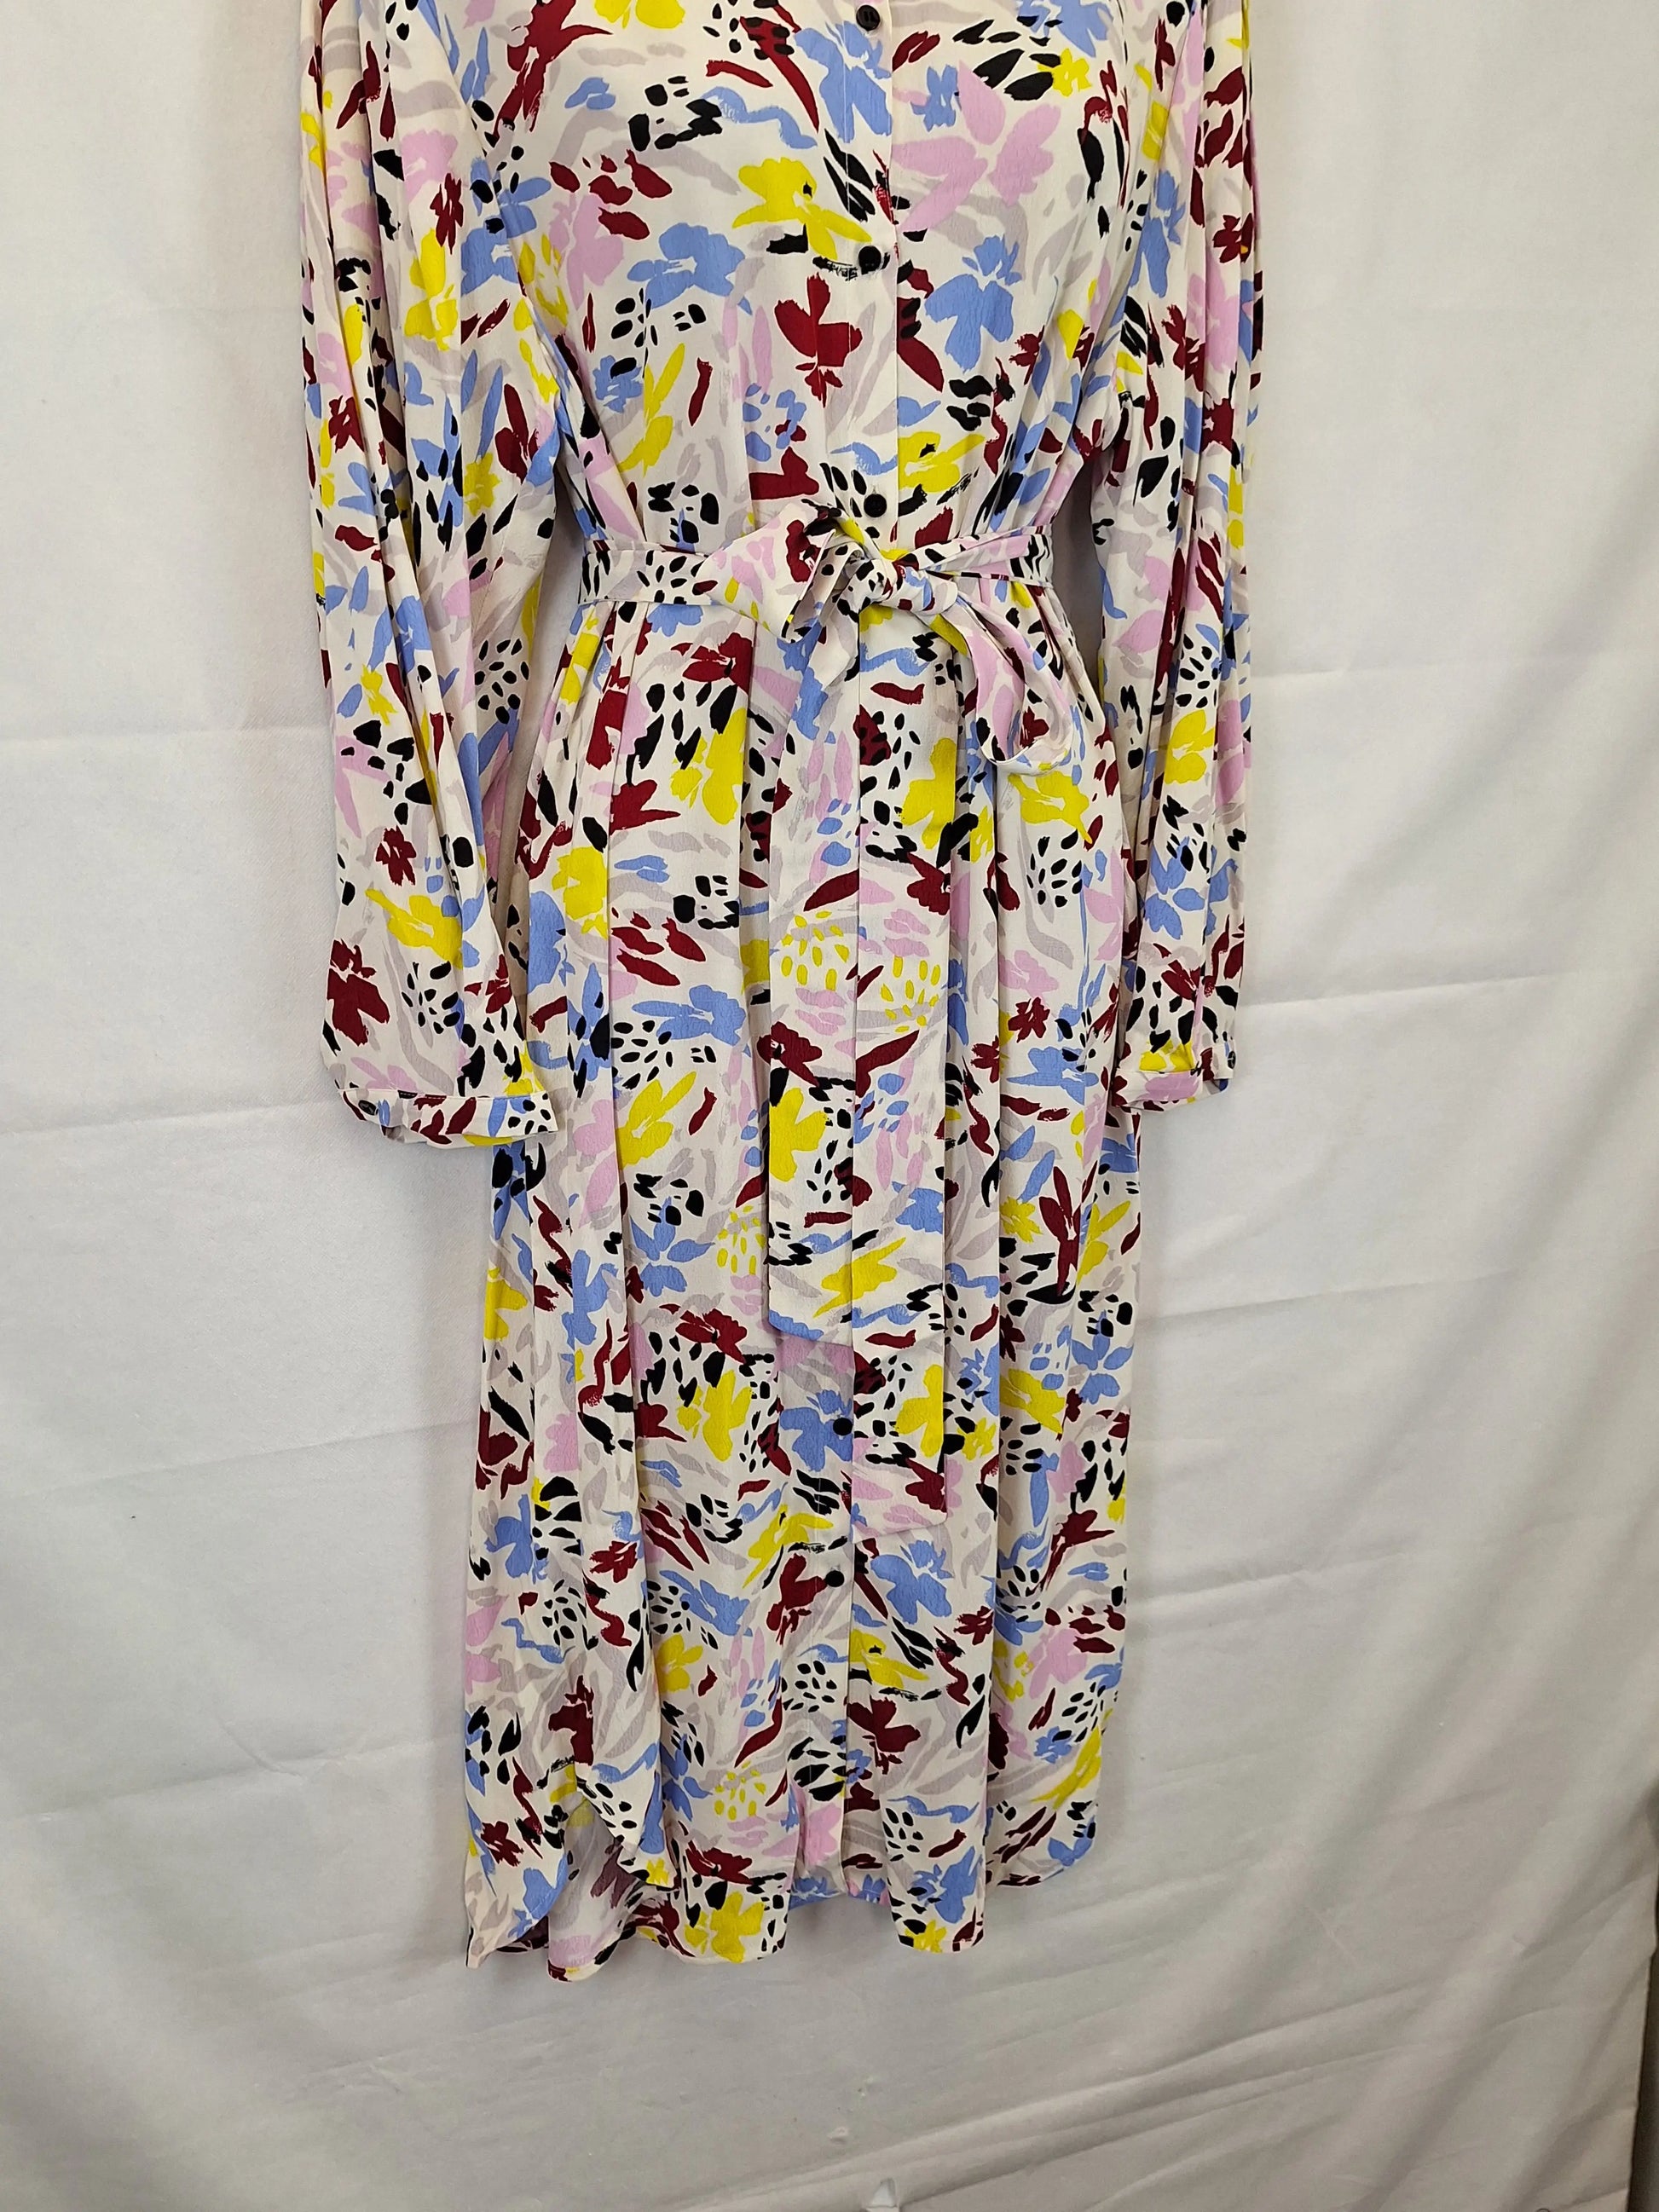 Gorman Funky Balloon Sleeve Shirt Maxi Dress Size 12 by SwapUp-Online Second Hand Store-Online Thrift Store